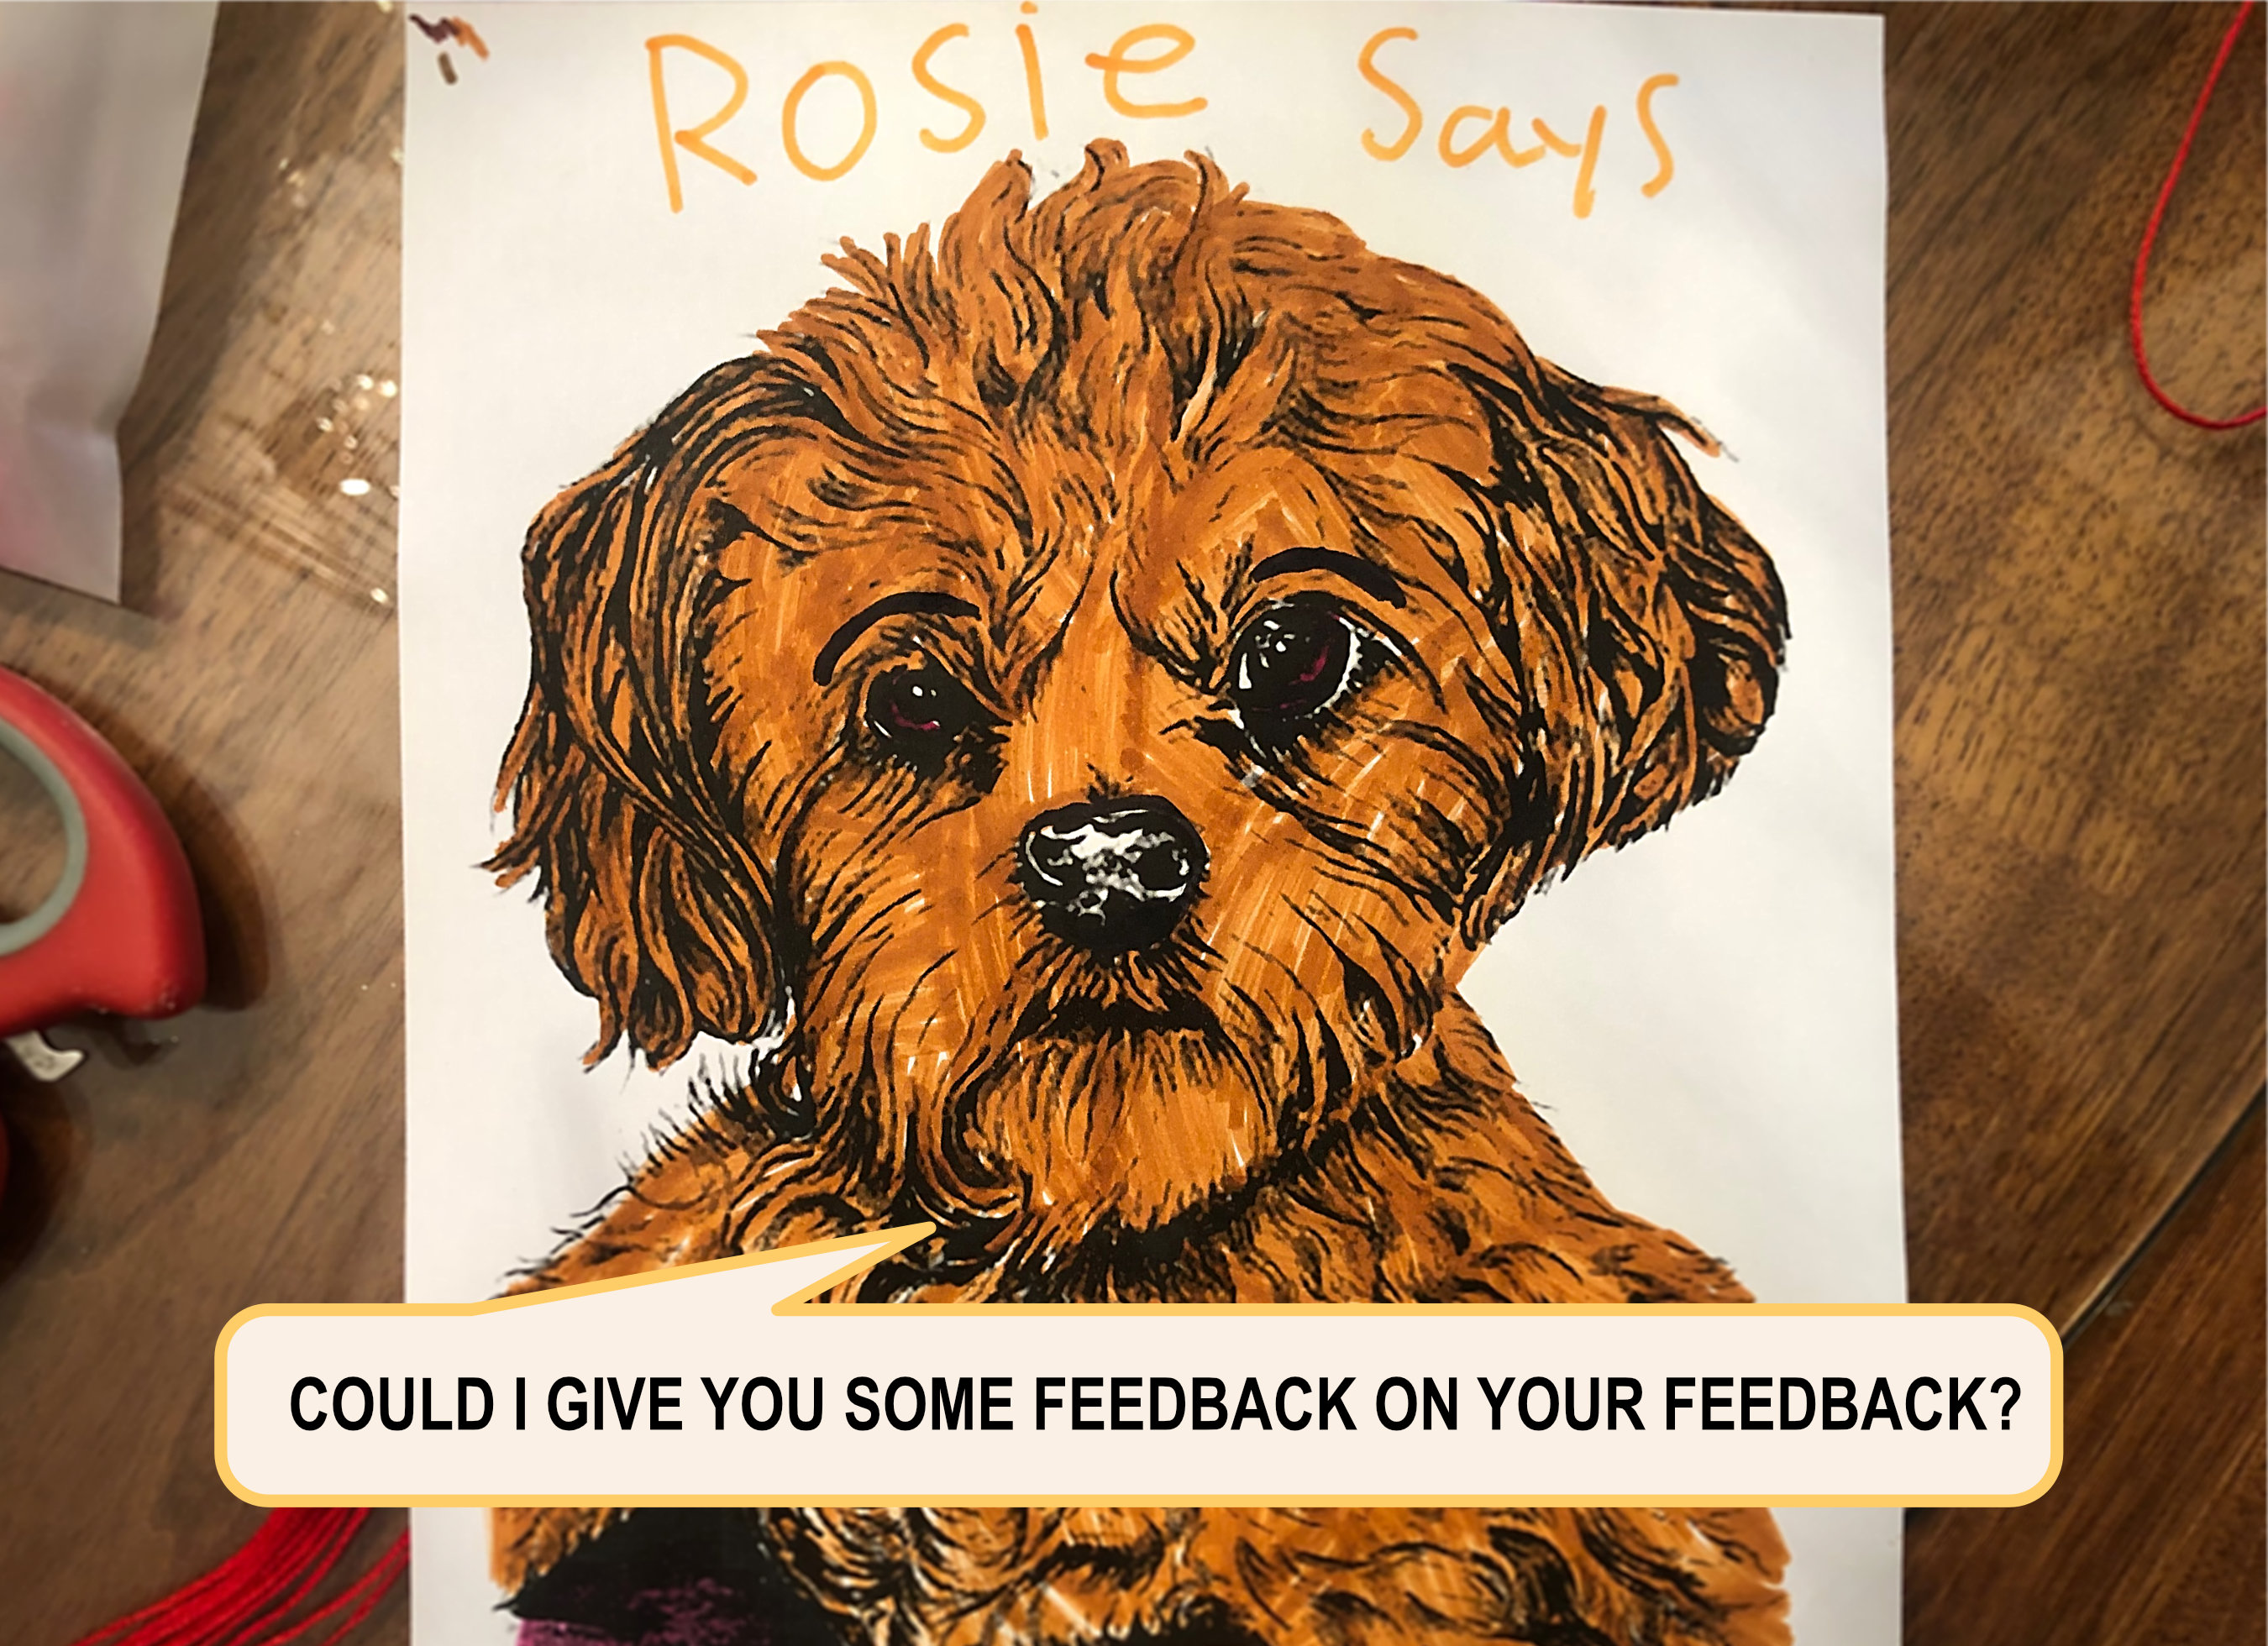 Rosie says feedback